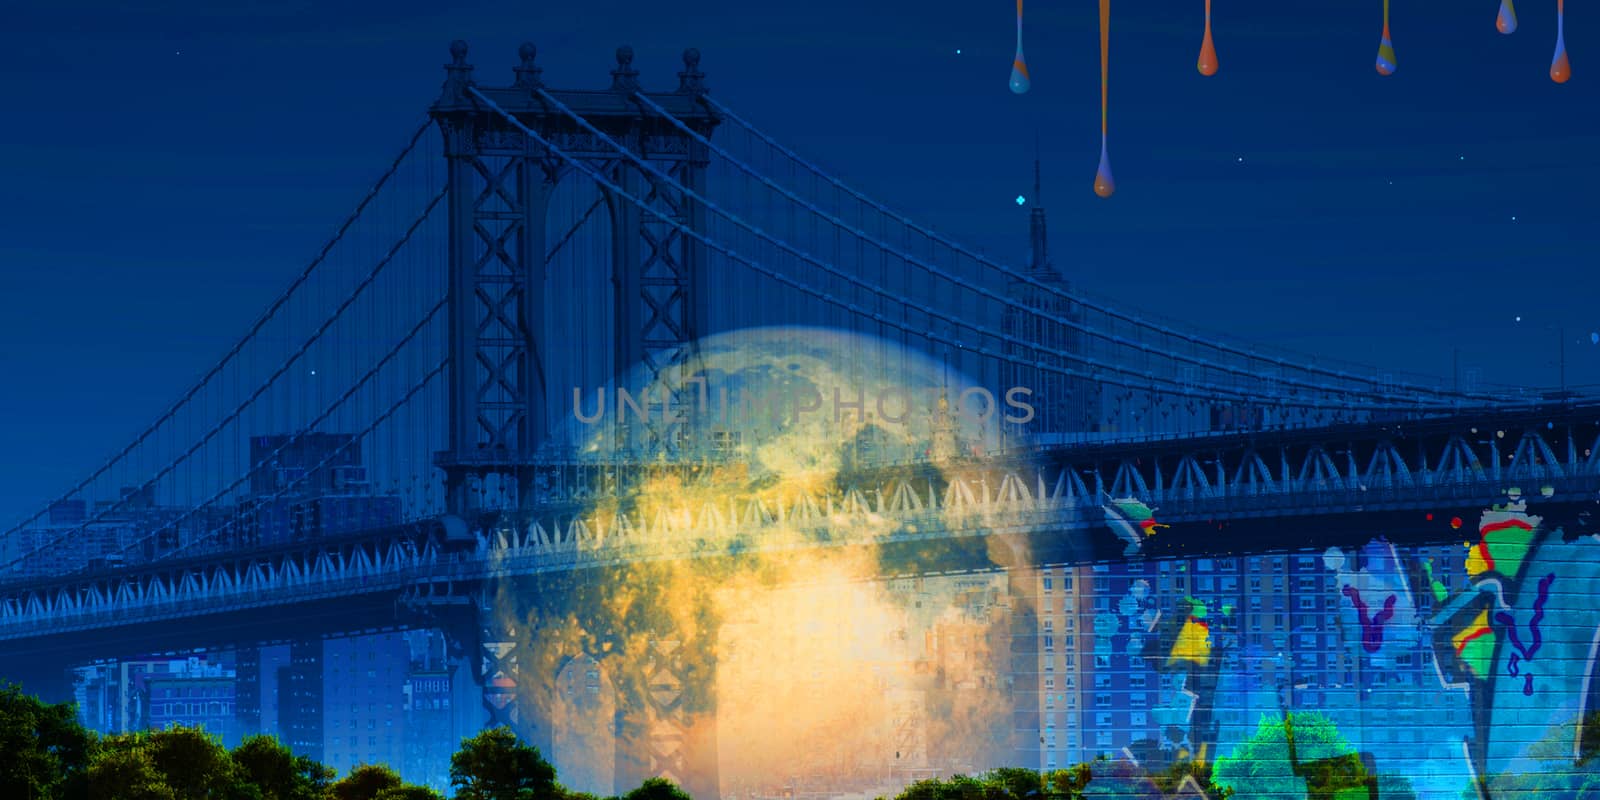 Surreal digital art. Manhattan bridge on New York's cityscape. Giant moon, pieces of graffiti. Paint drops.